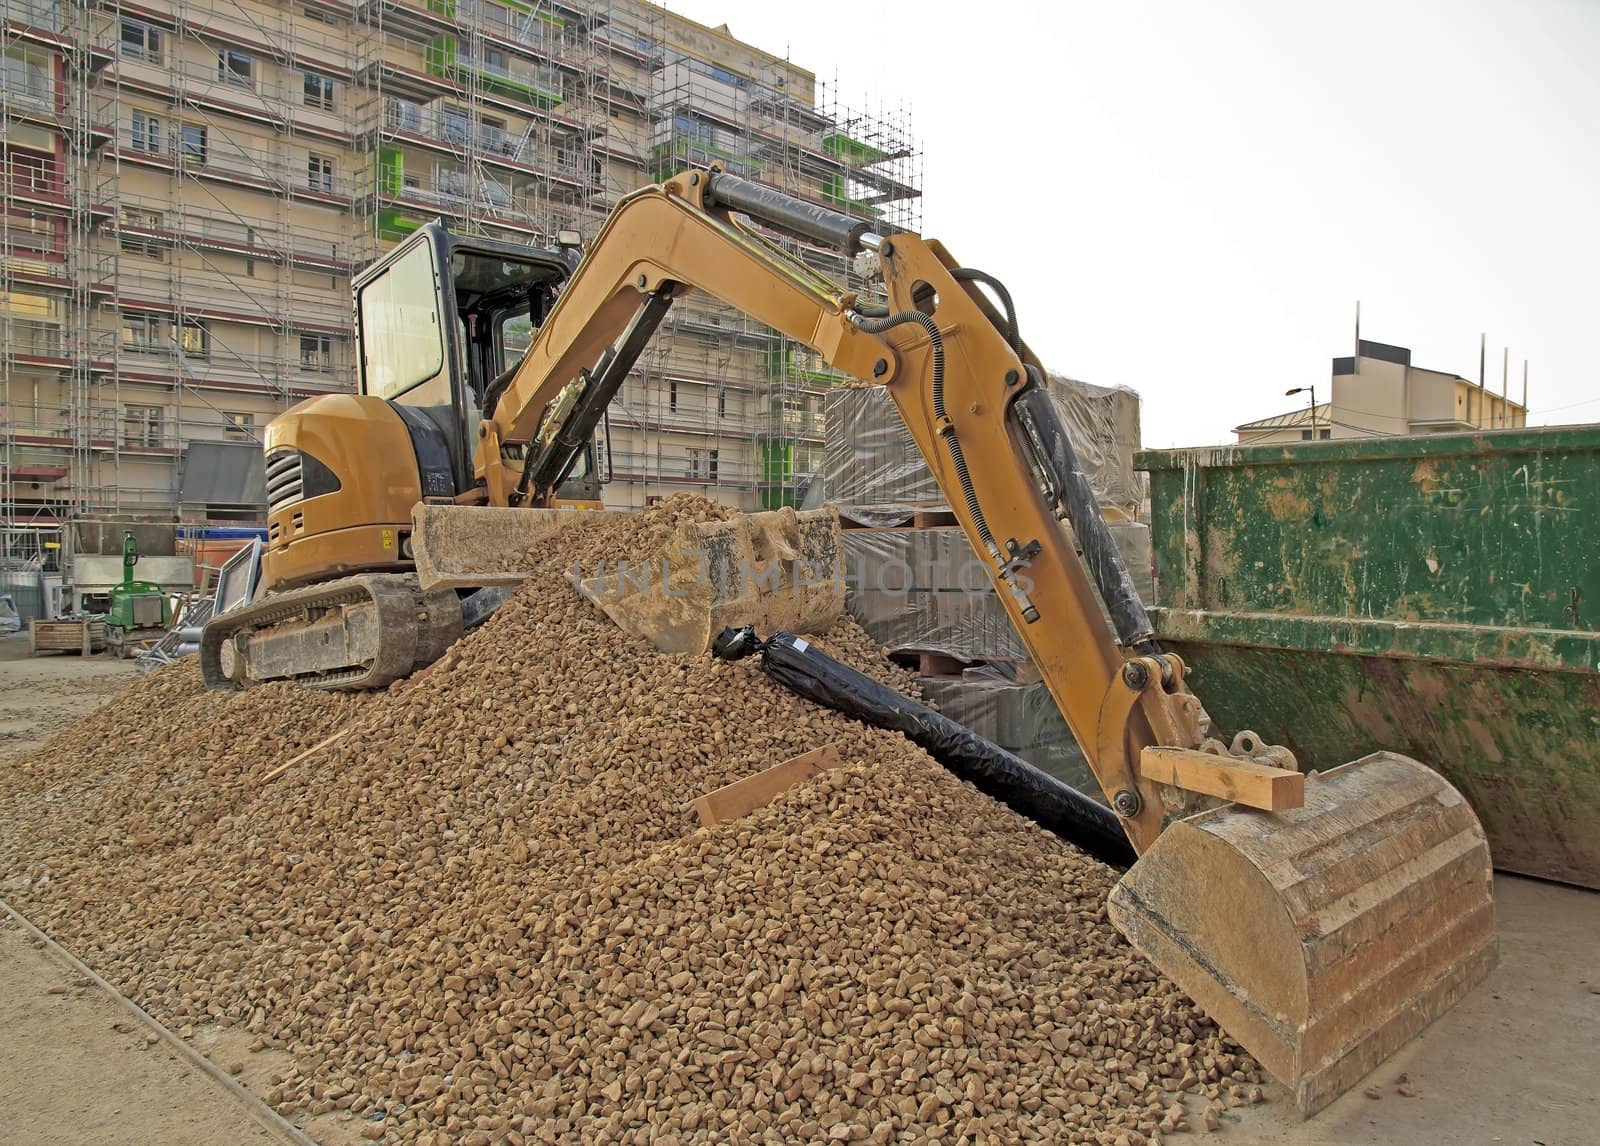 bulldozer on gravel by neko92vl